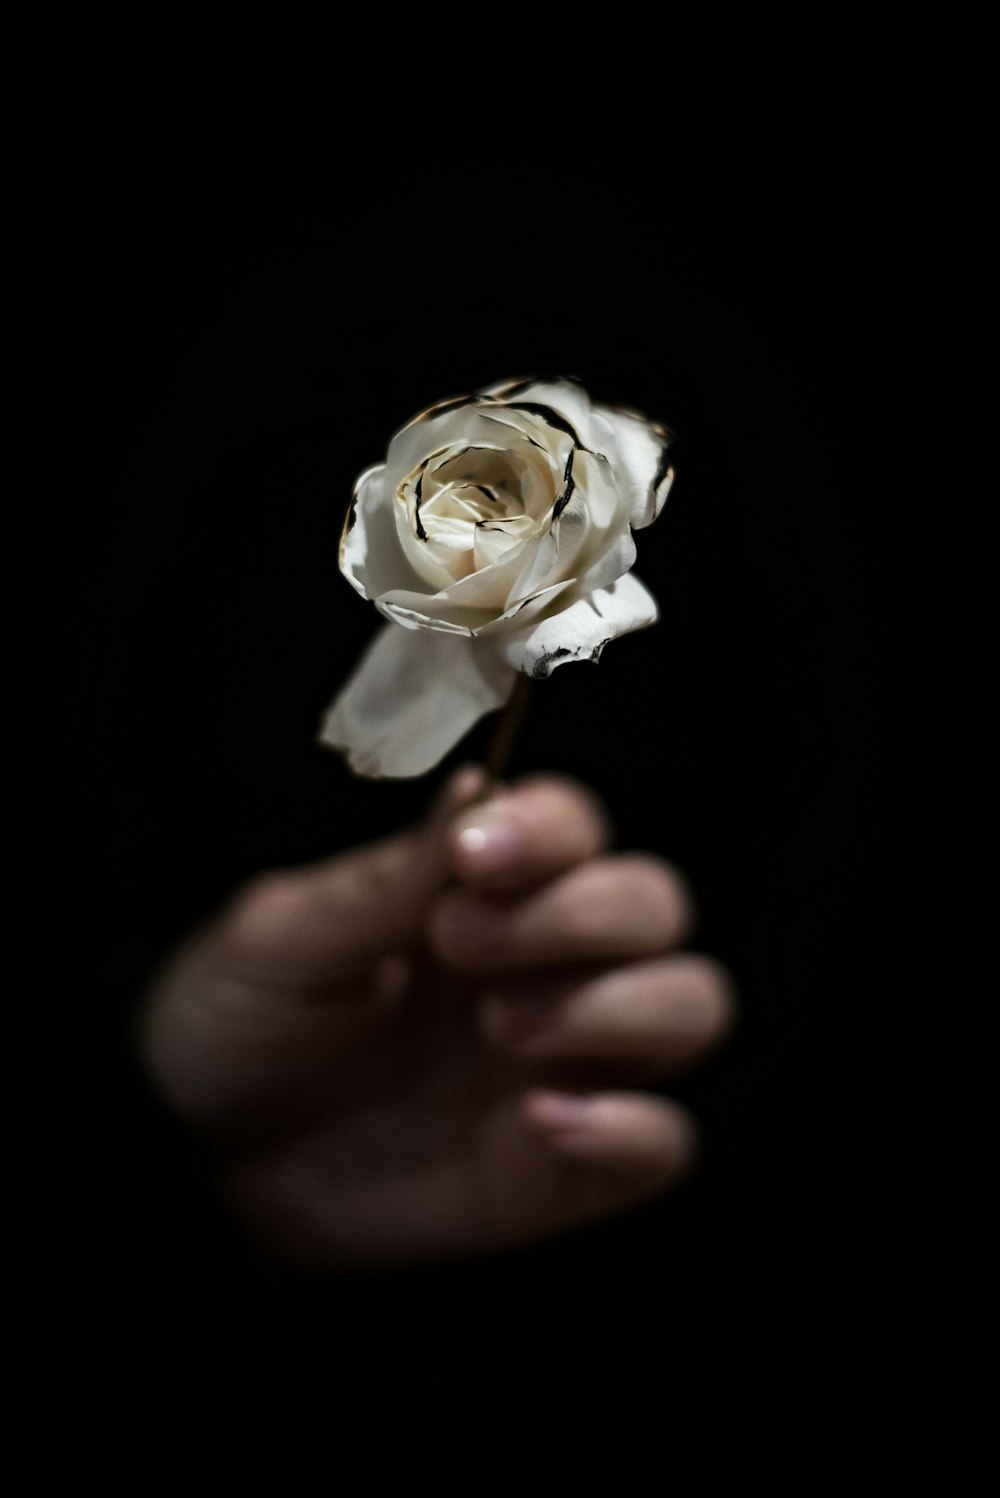 Persona sosteniendo una rosa blanca